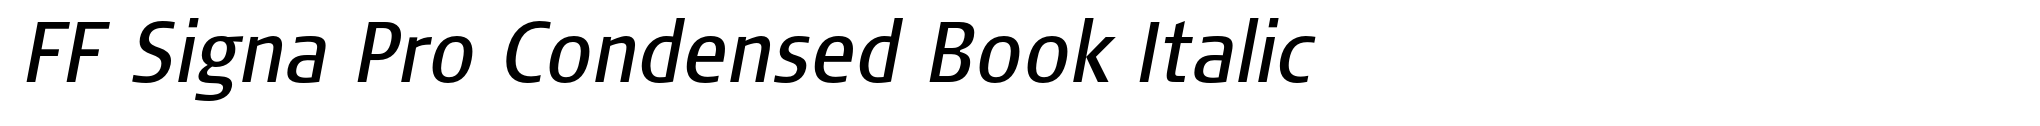 FF Signa Pro Condensed Book Italic image